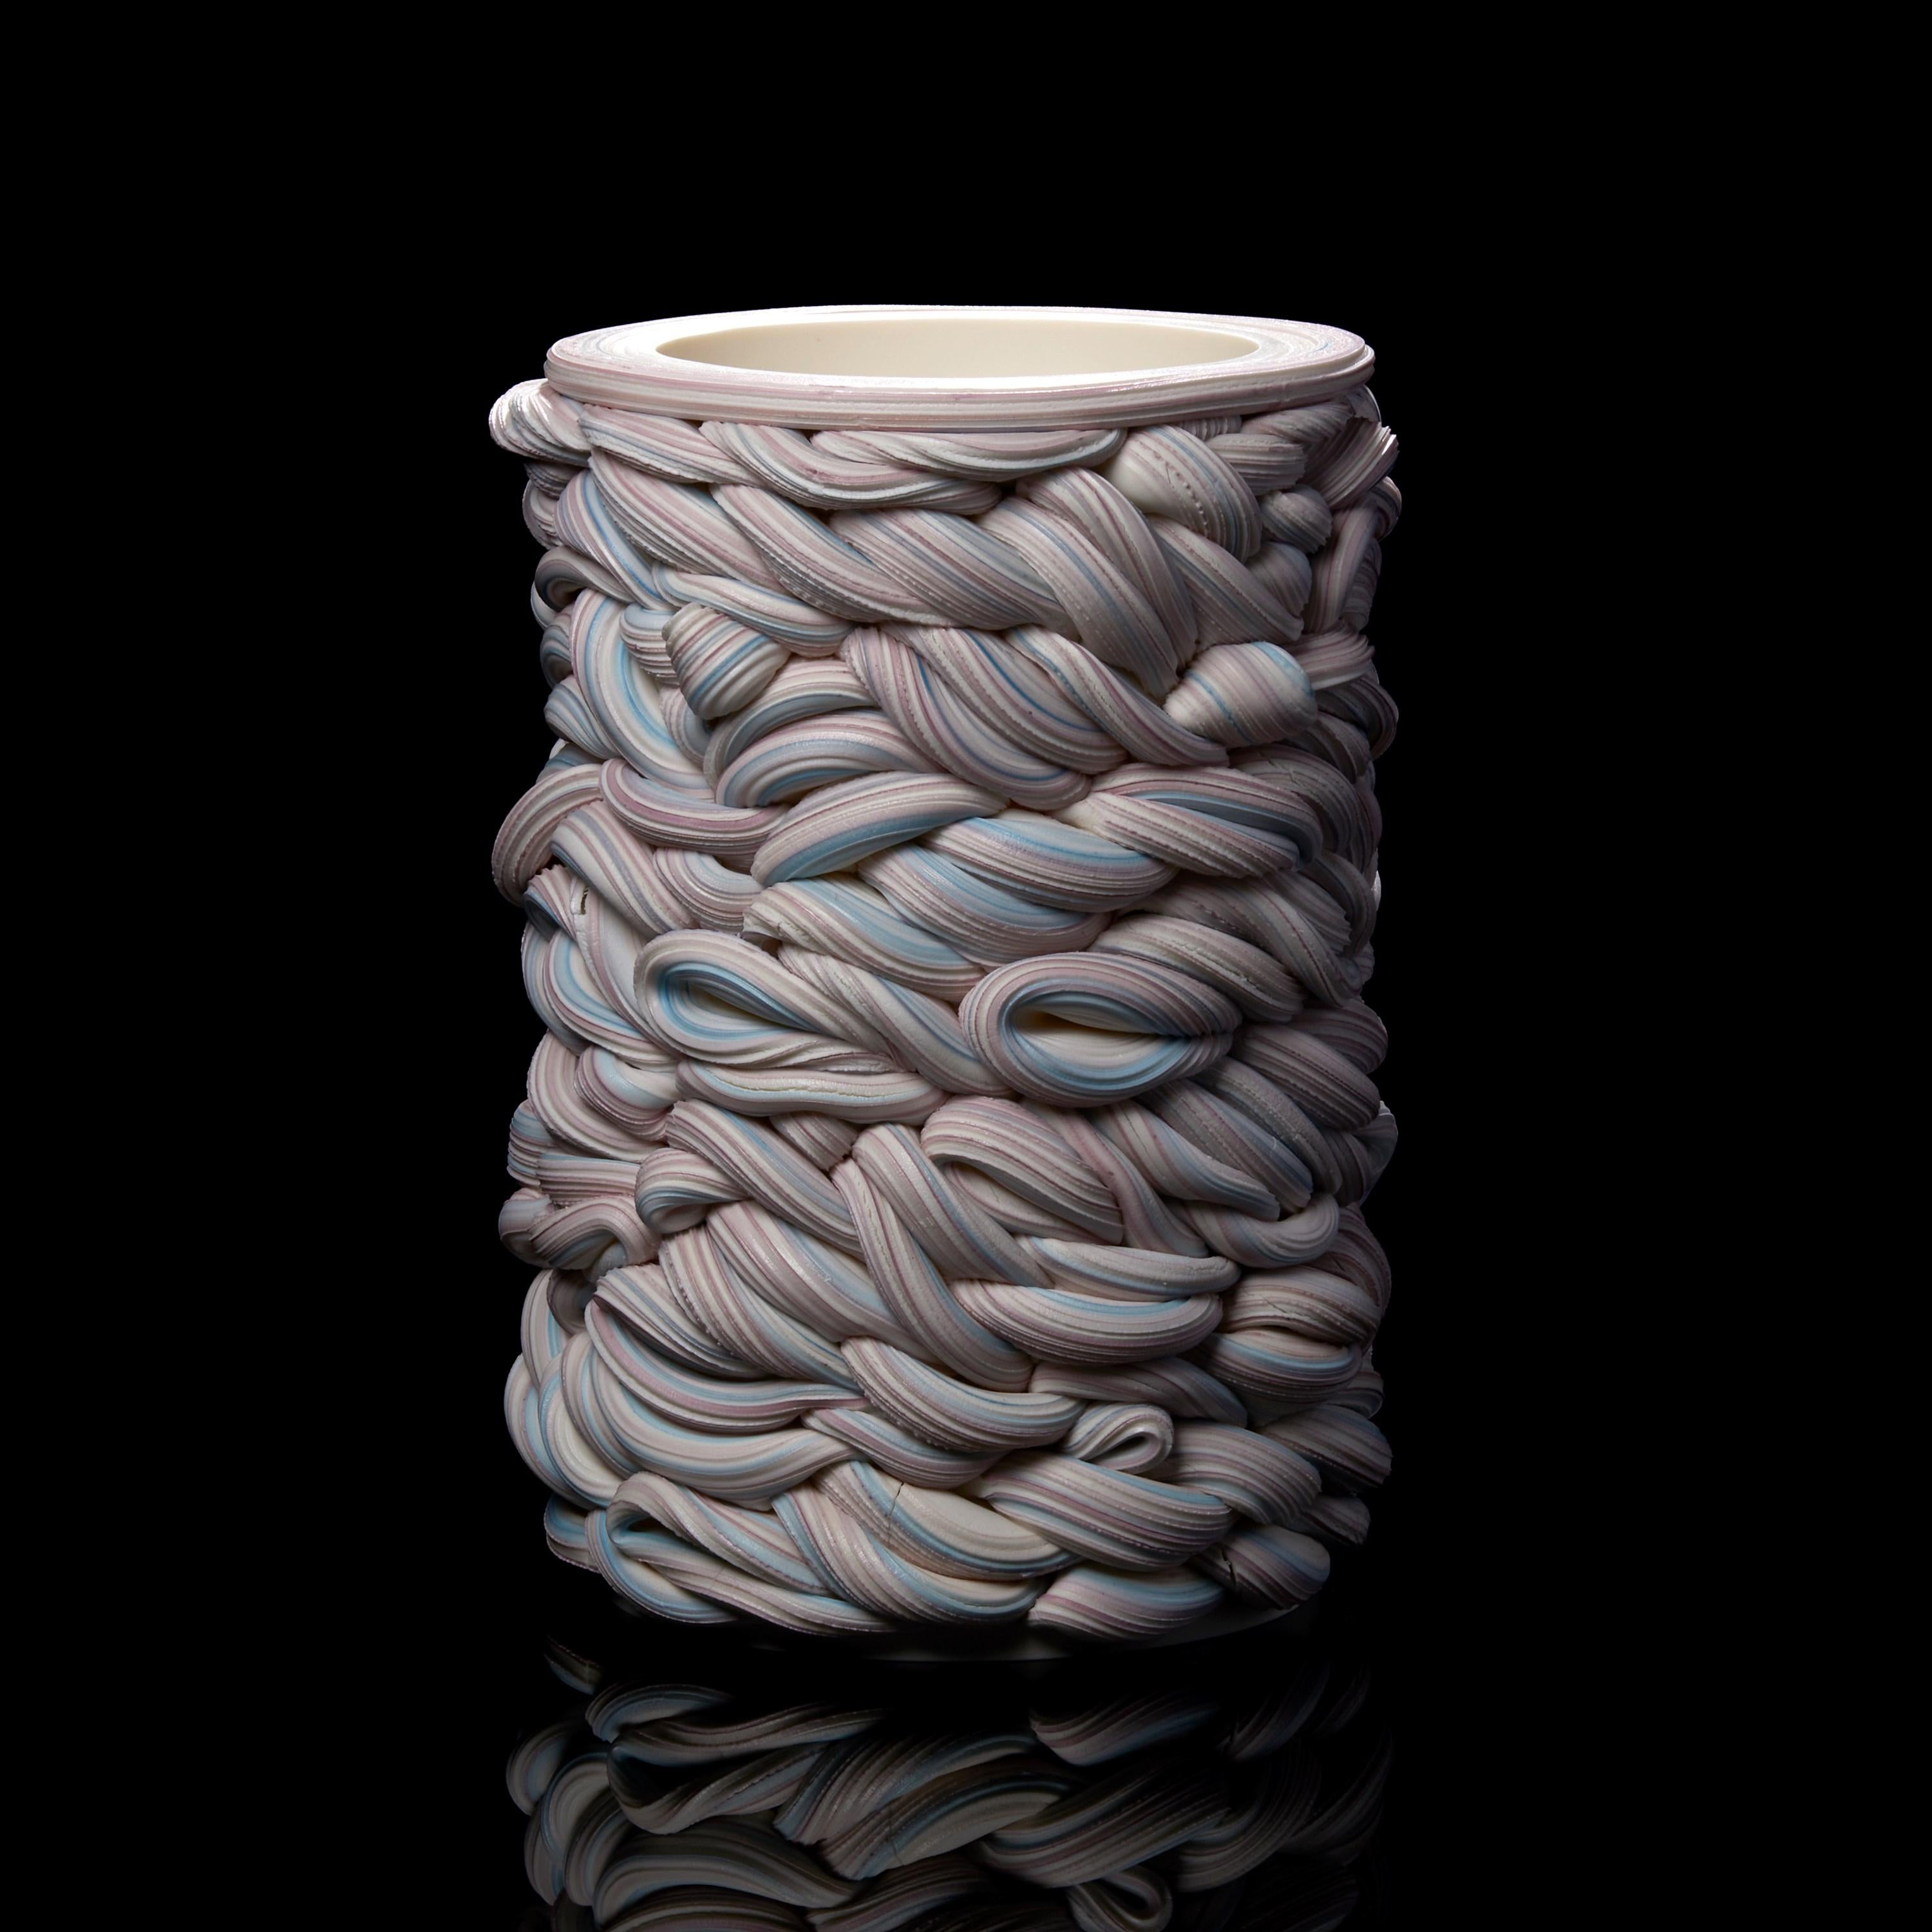 Hand-Crafted Banded Fold I, a Purple Parian Porcelain Sculptural Vessel by Steven Edwards